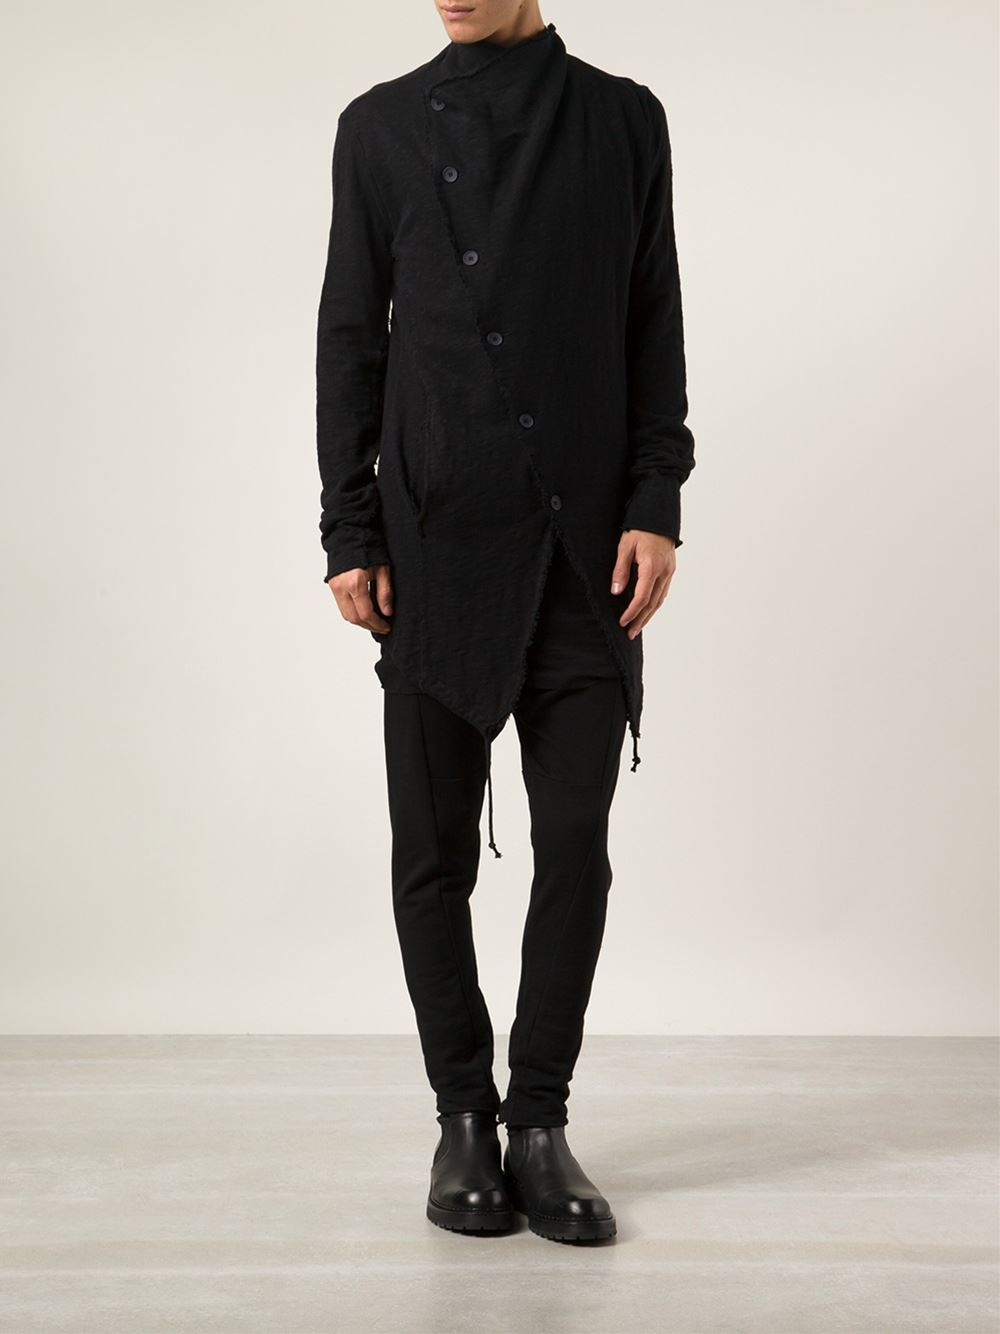 Thom Krom Asymmetric Sweater in Black for Men - Lyst